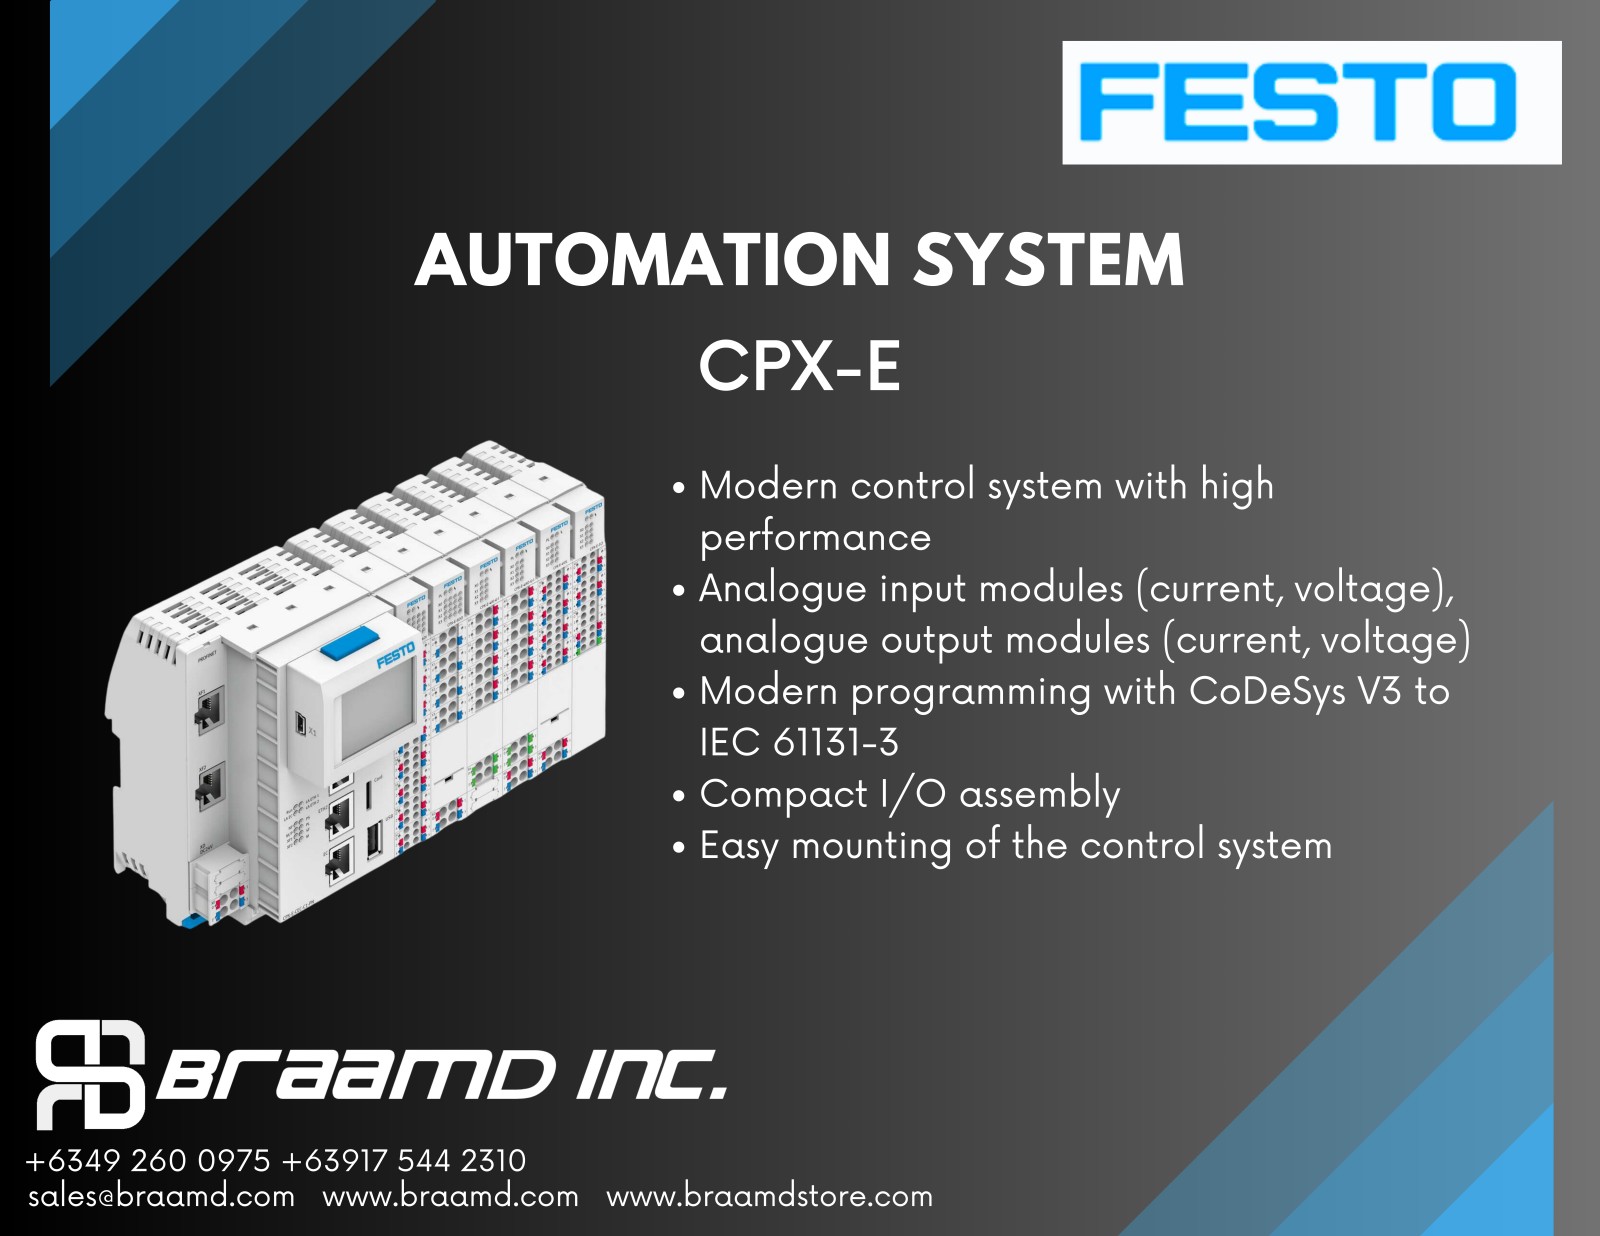 Festo Automation System CPX-E